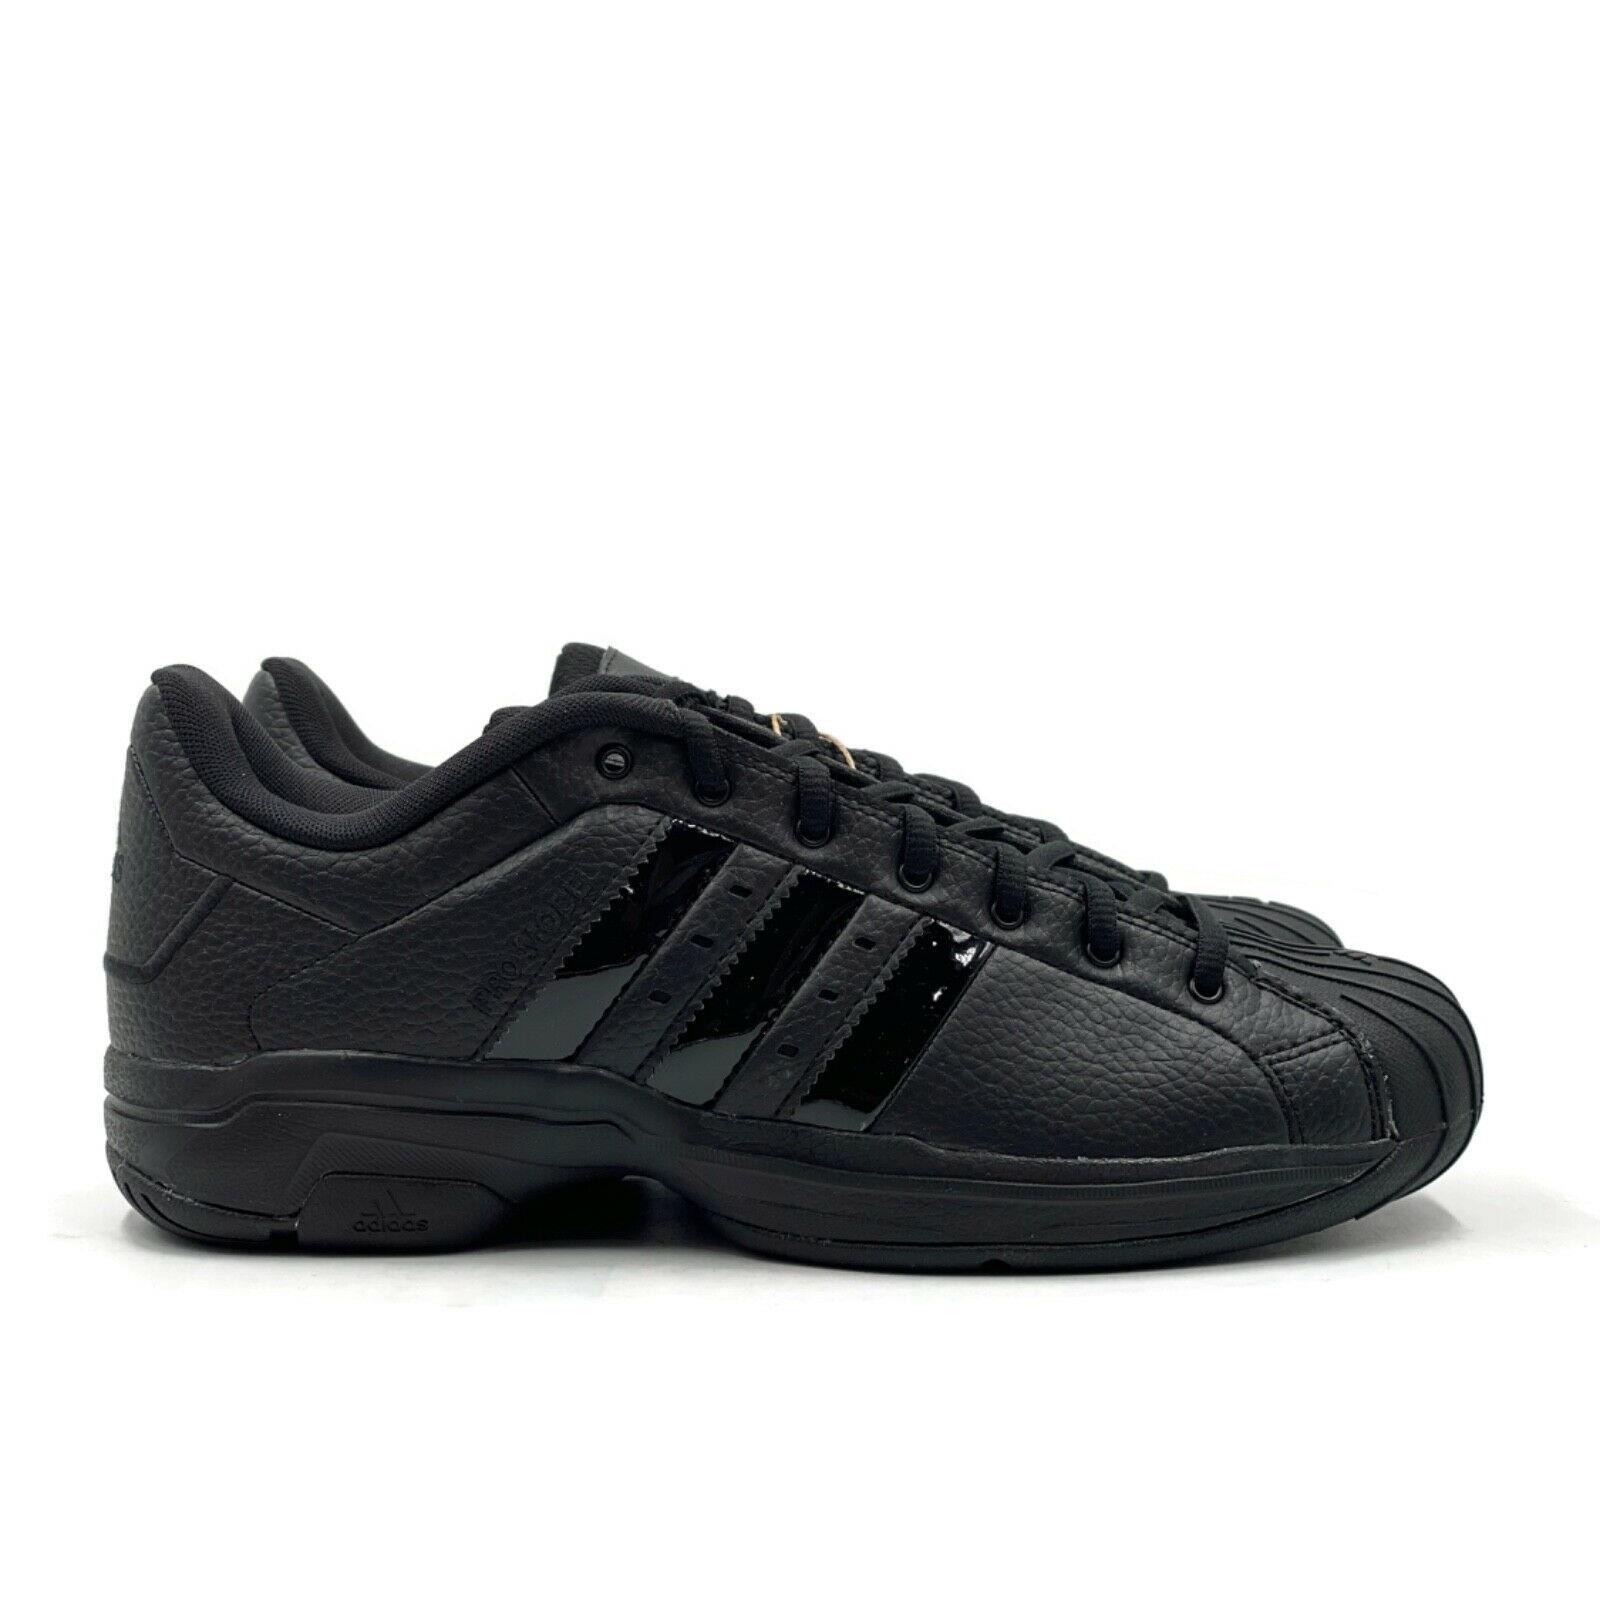 Adidas Pro Model 2G Low Men Sz 8 Basketball Shoe Black Retro Trainer Sneaker